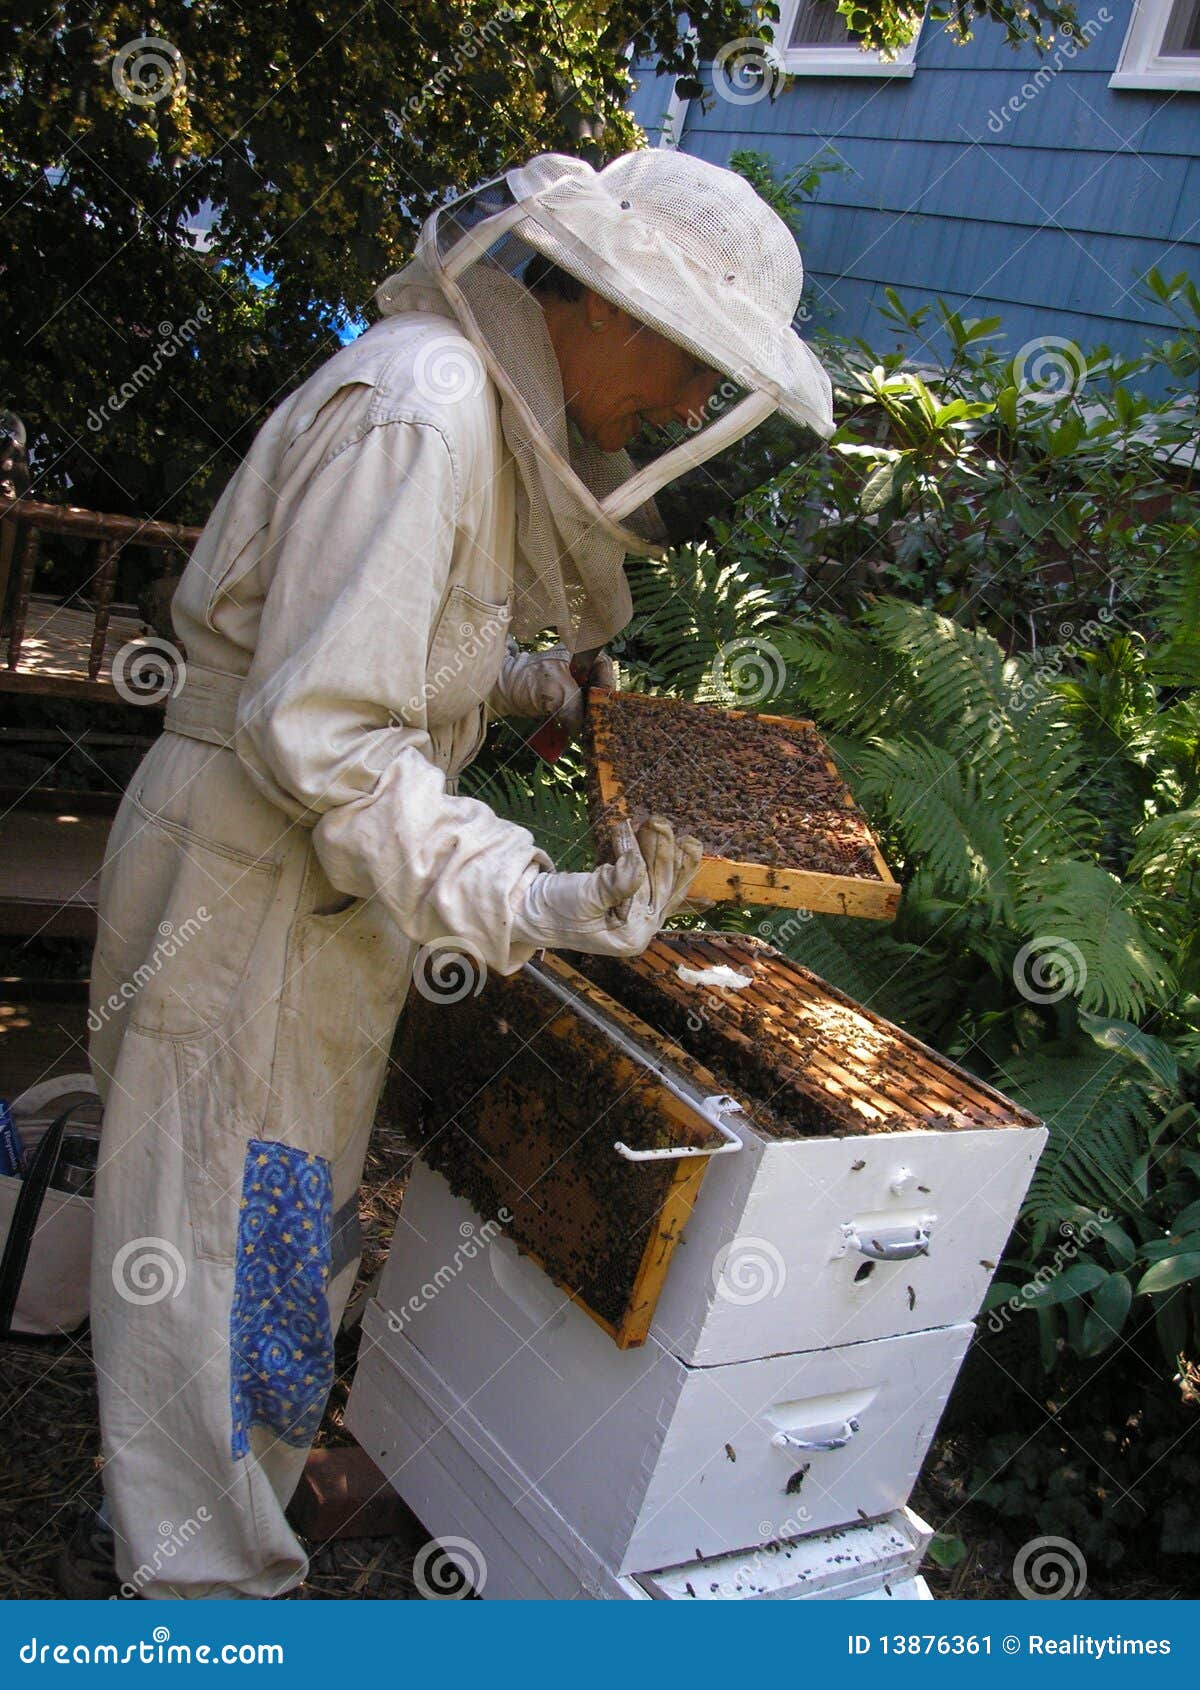 beekeeper checking hive